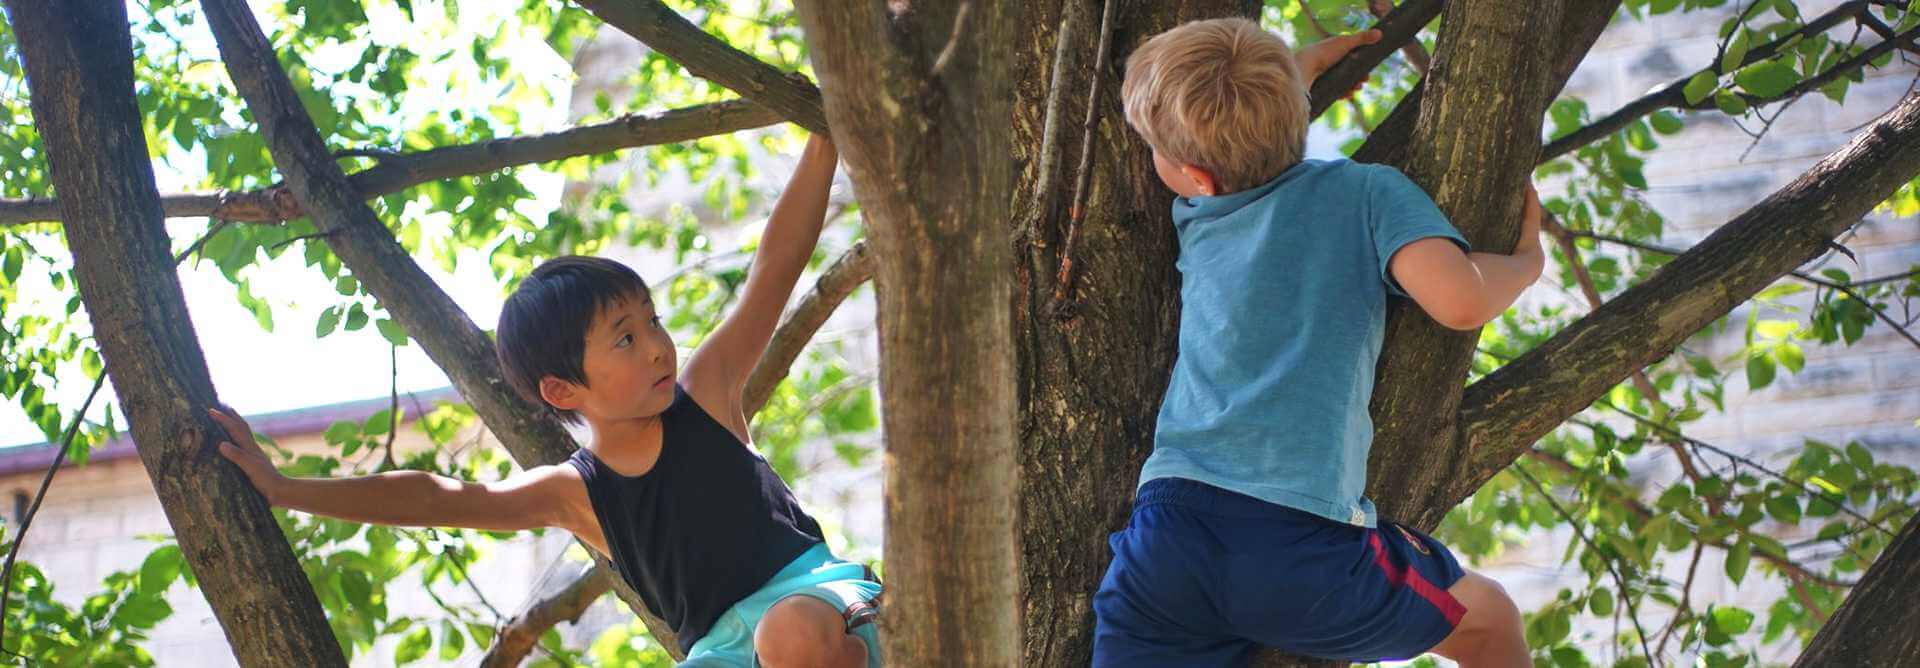 Kids climbing in a tree